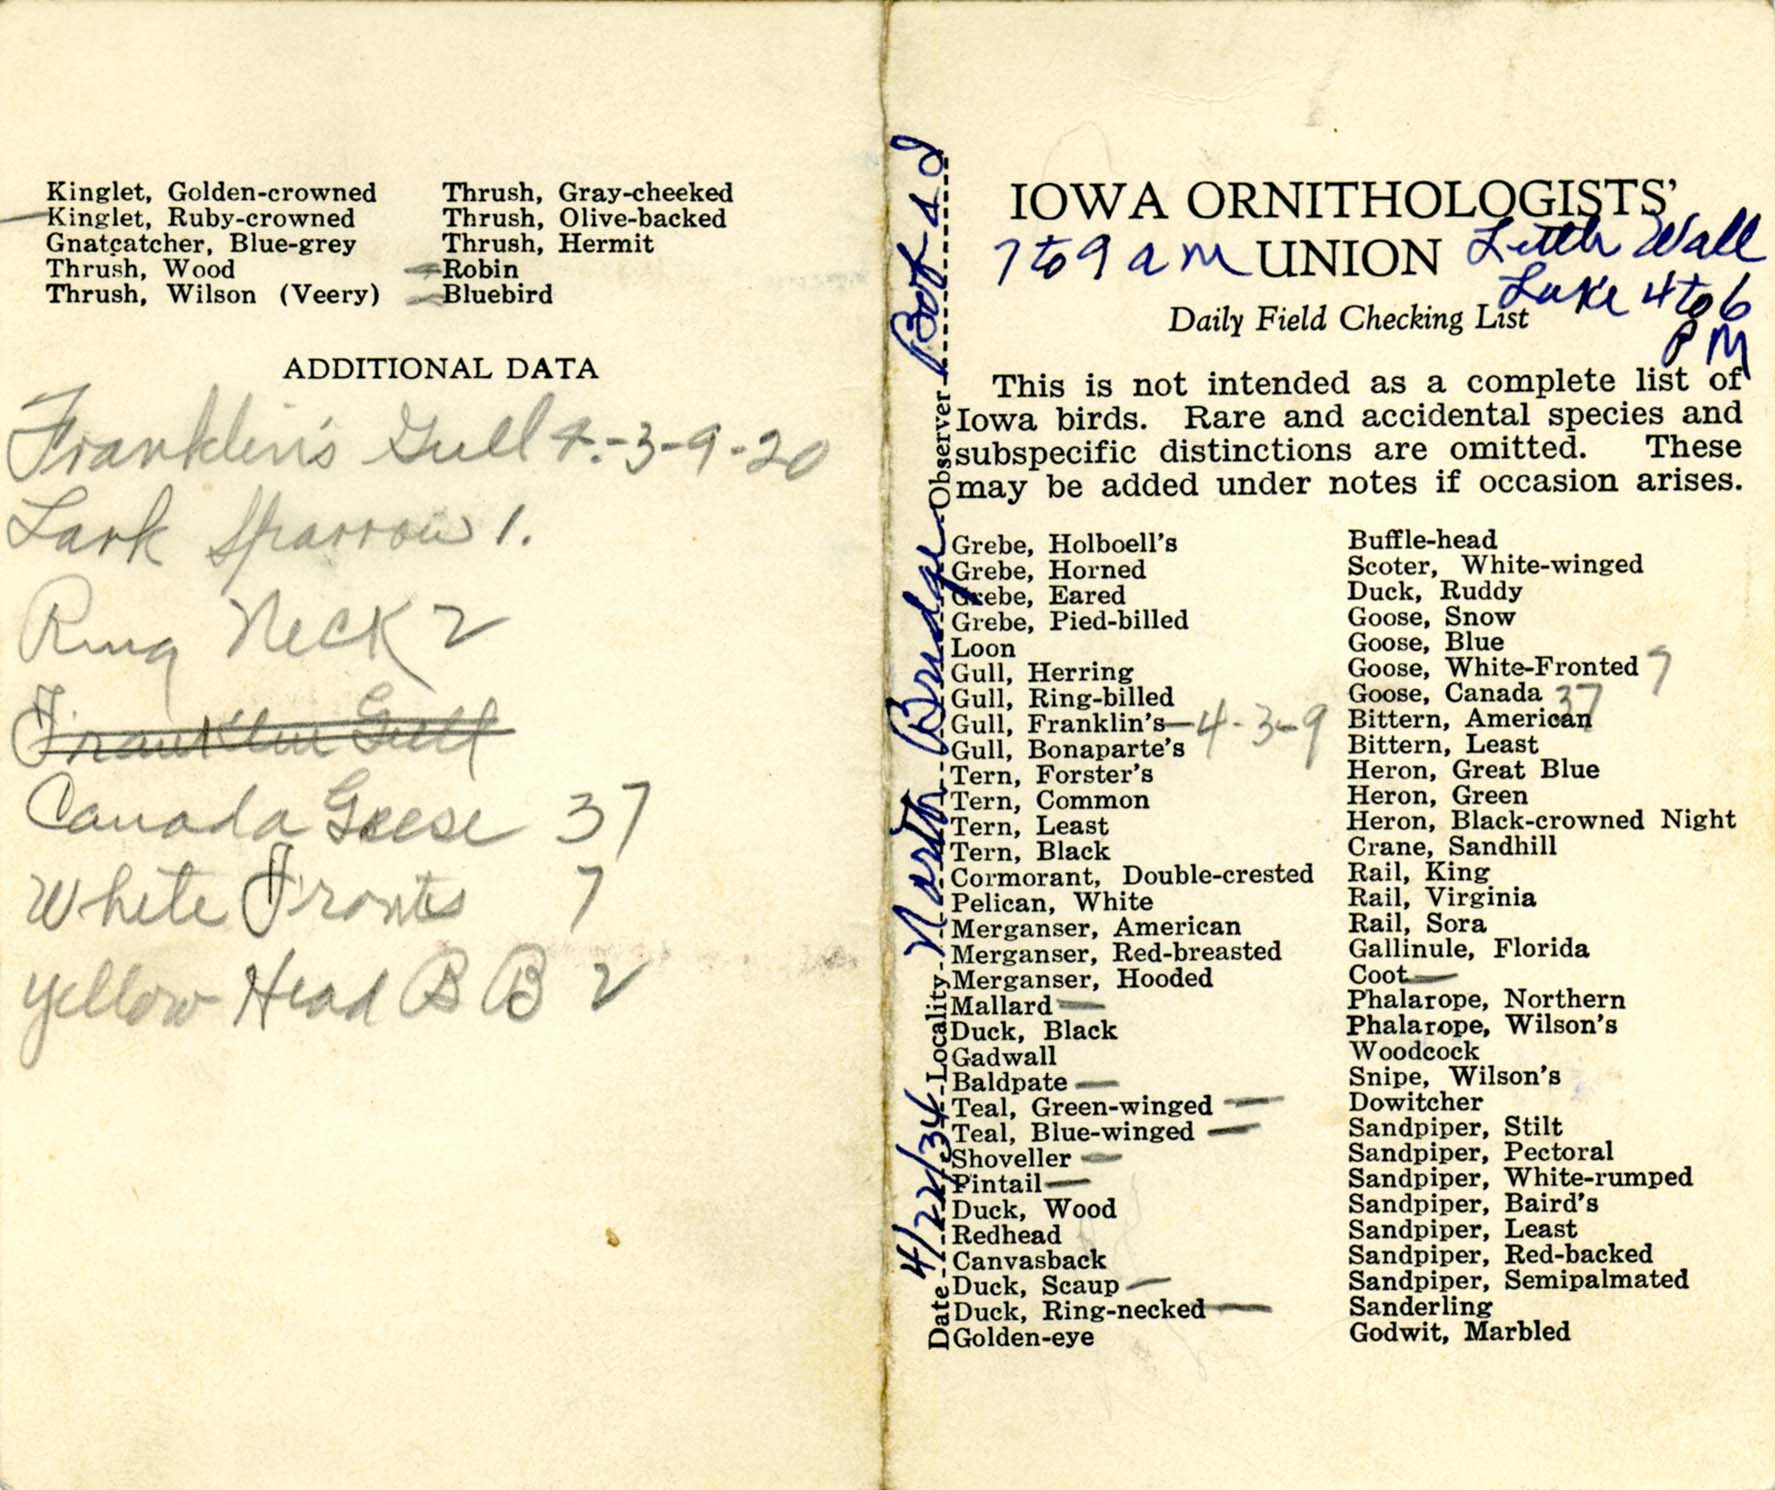 Daily field checking list, Walter Rosene, April 22, 1934